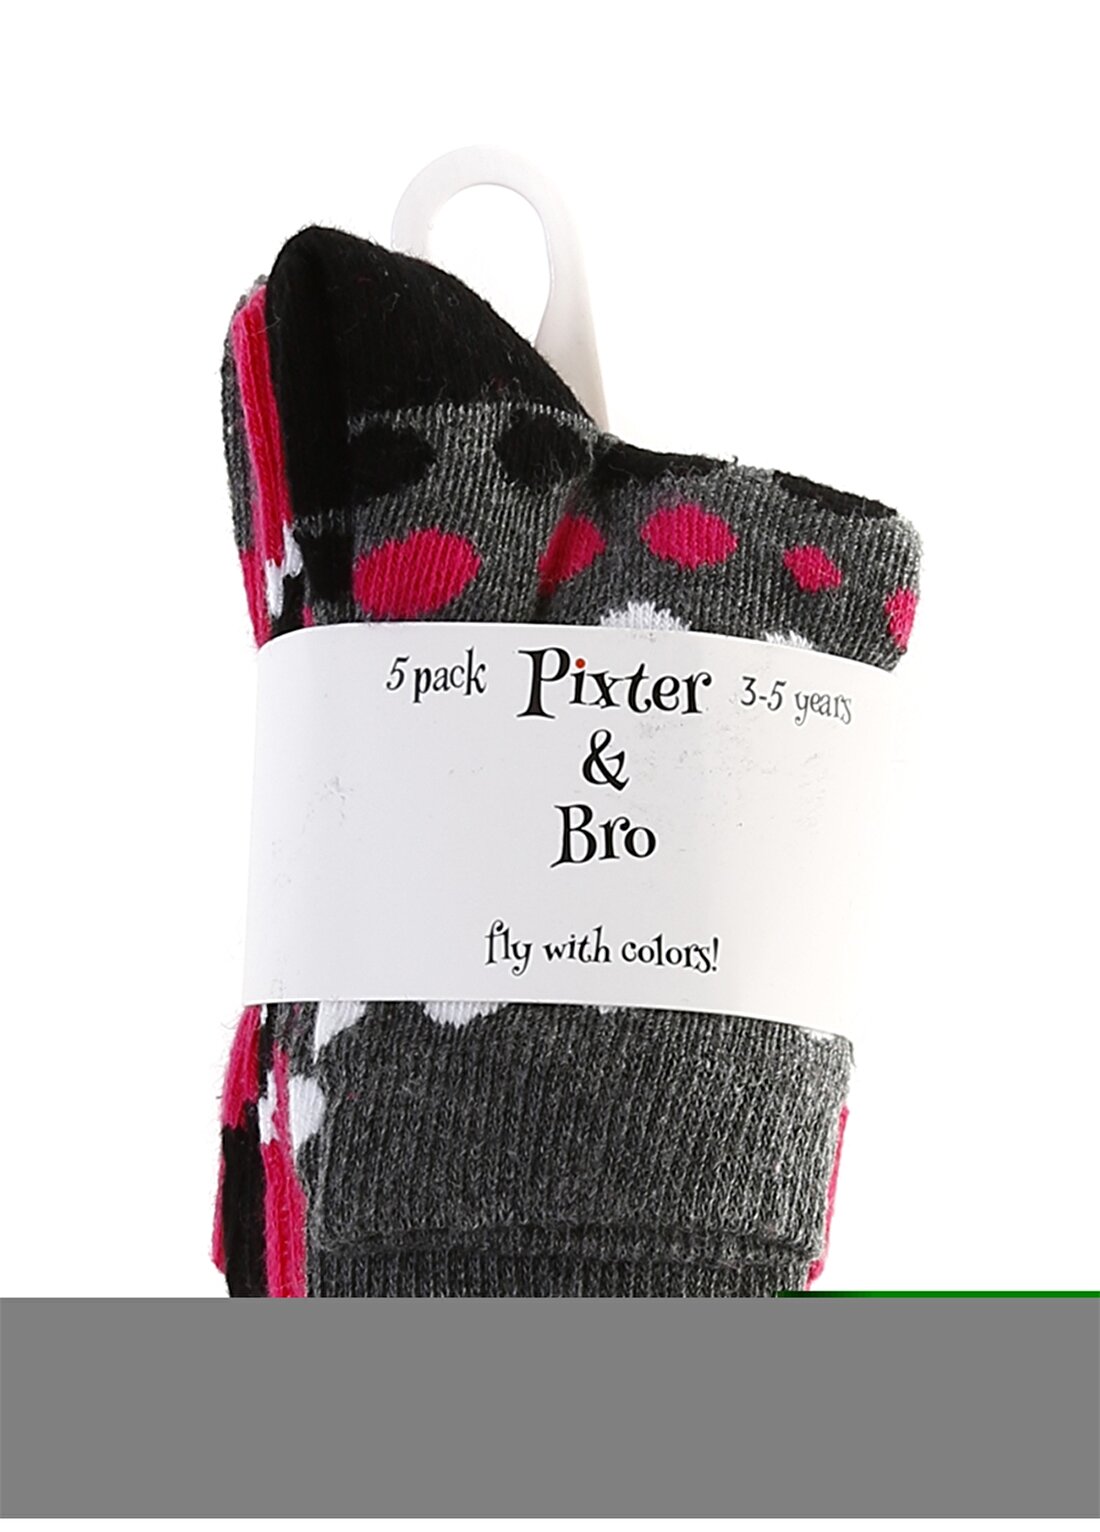 Pixter&Bro Soket Çorap